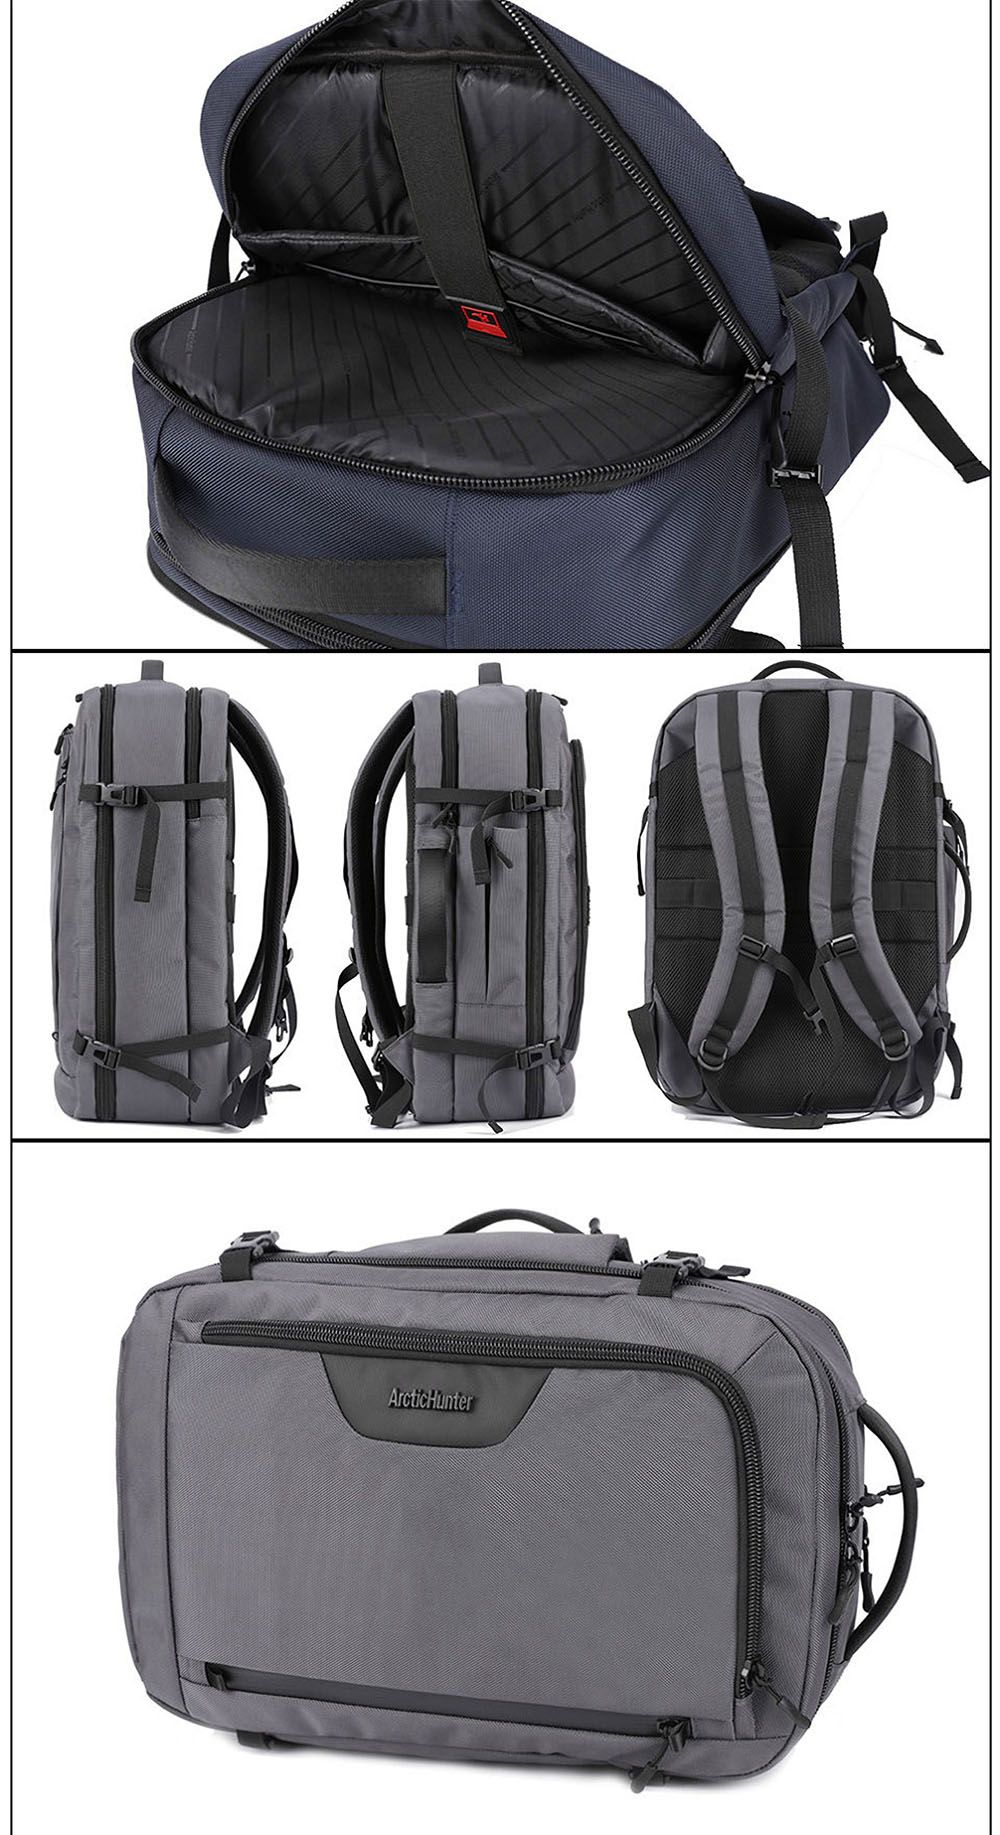 ARCTICHUNTER-156-Inch-Laptop-Backpack-Mens-Womens-Waterproof-Shoulder-Bag-Business-Laptop-Bag-Large--1522969